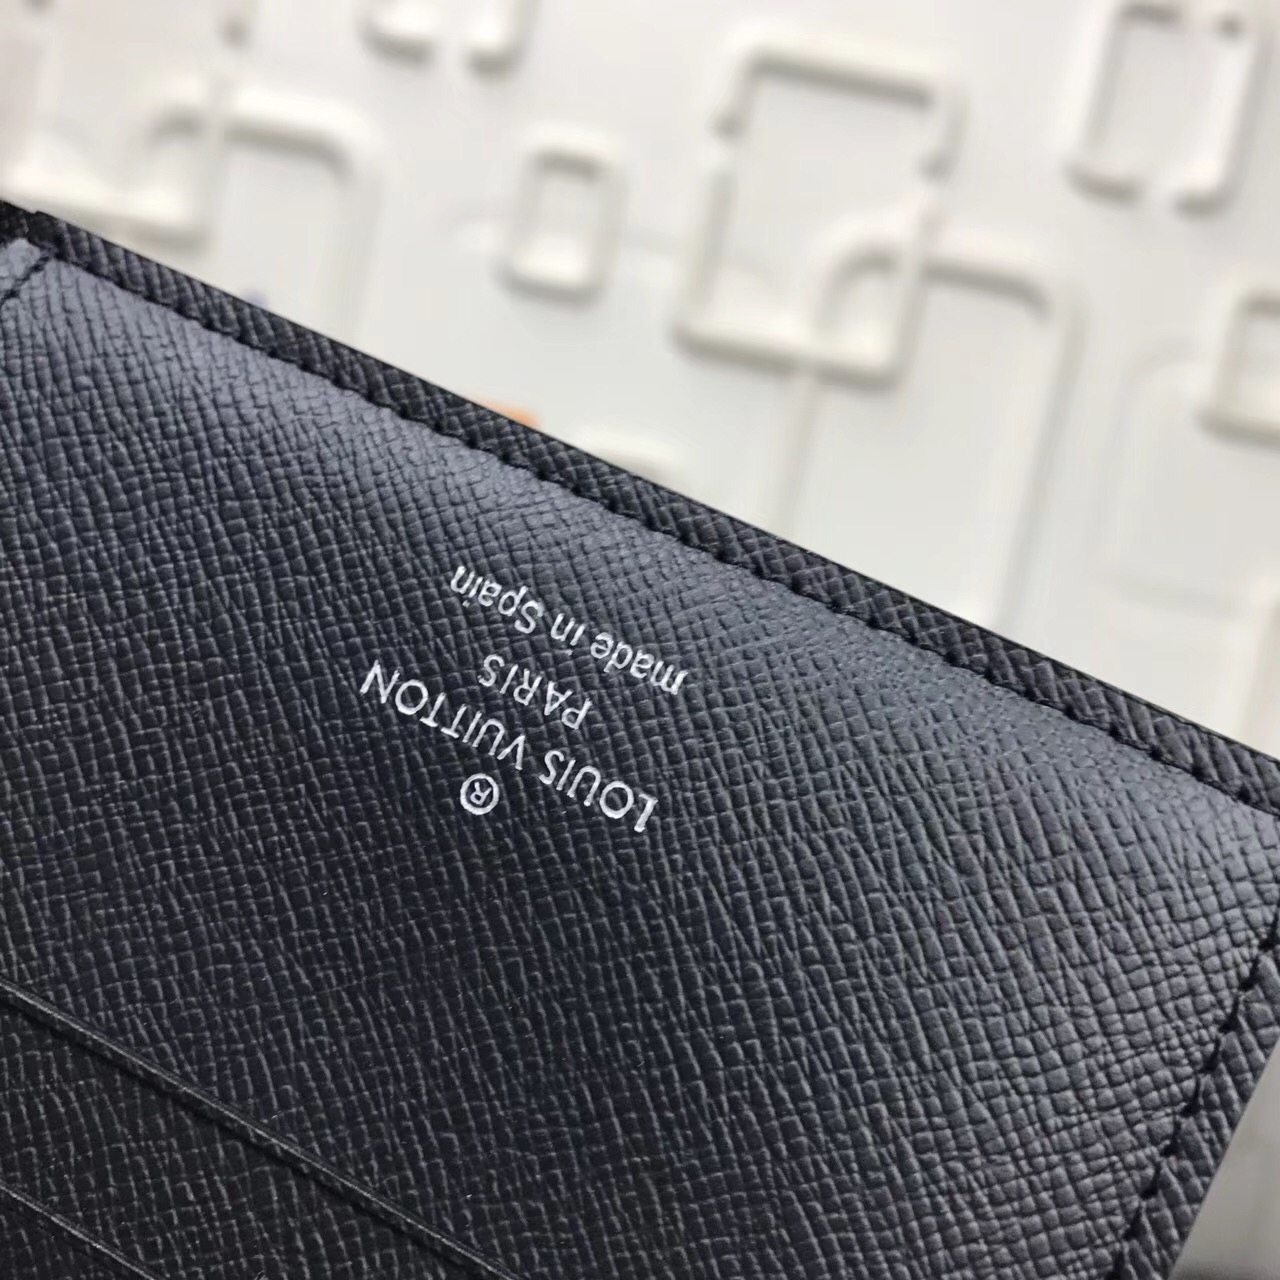 Louis Vuitton Marco Wallet in Damier Graphite - SOLD